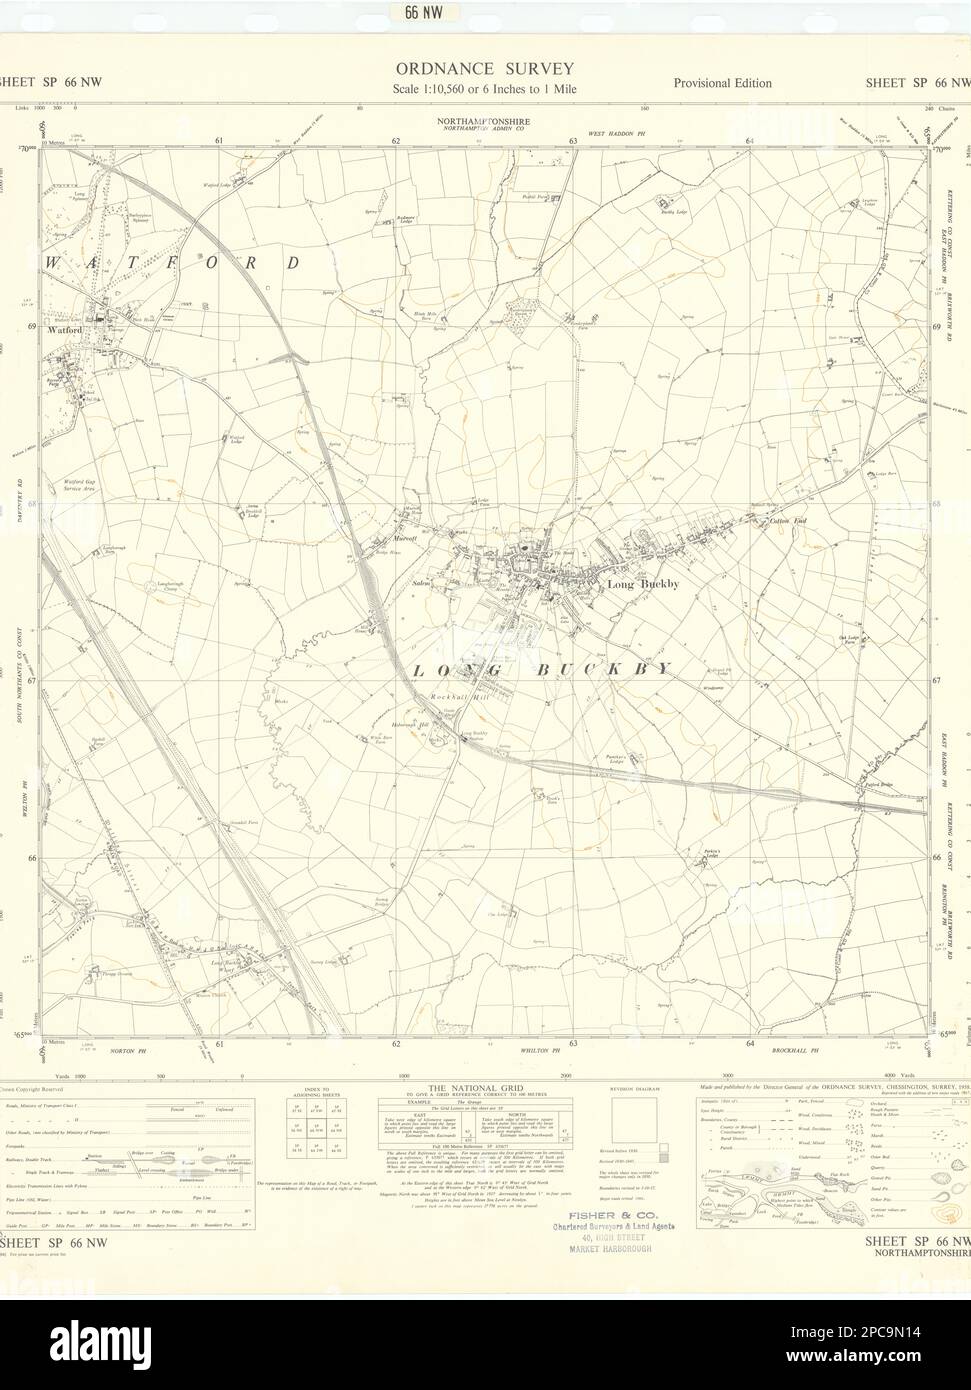 Ordnance Survey Sheet SP66NW Northamptonshire Long Buckby Watford 1958 mapa antiguo Foto de stock